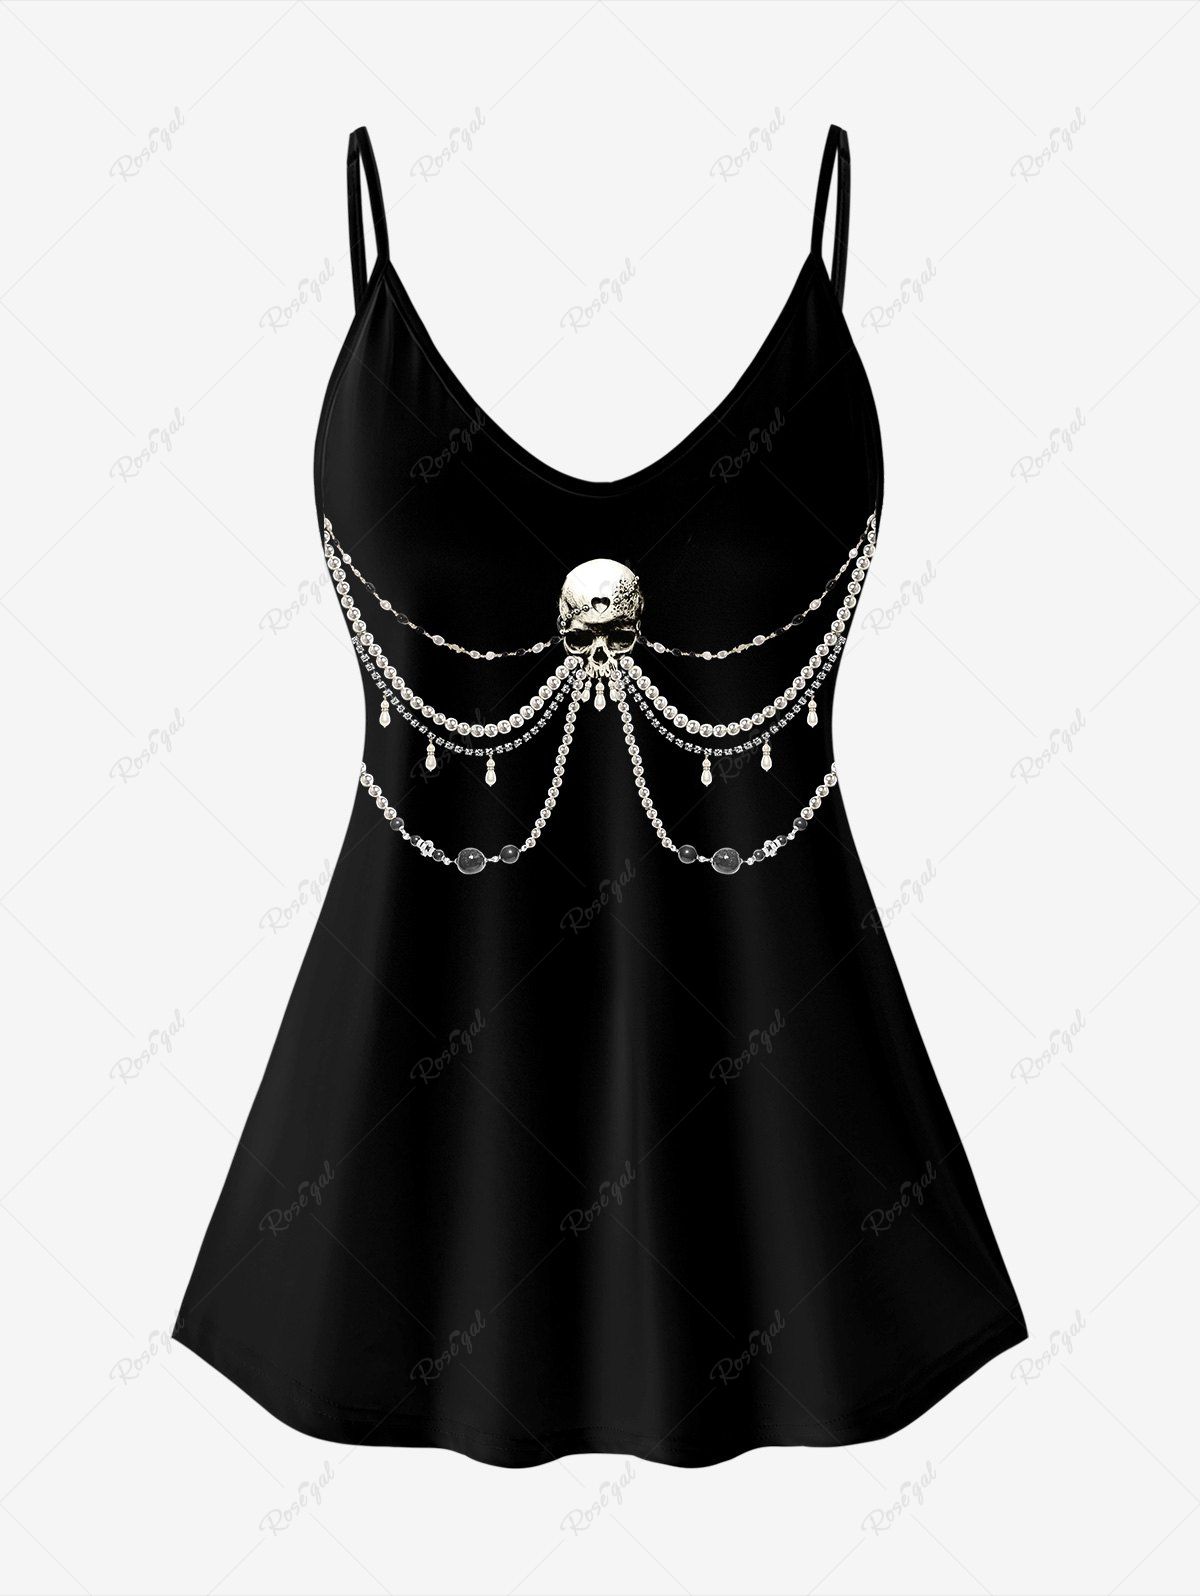 Chic Gothic Skull 3D Bead Rhinestone Print Cami Top (Adjustable Straps)  